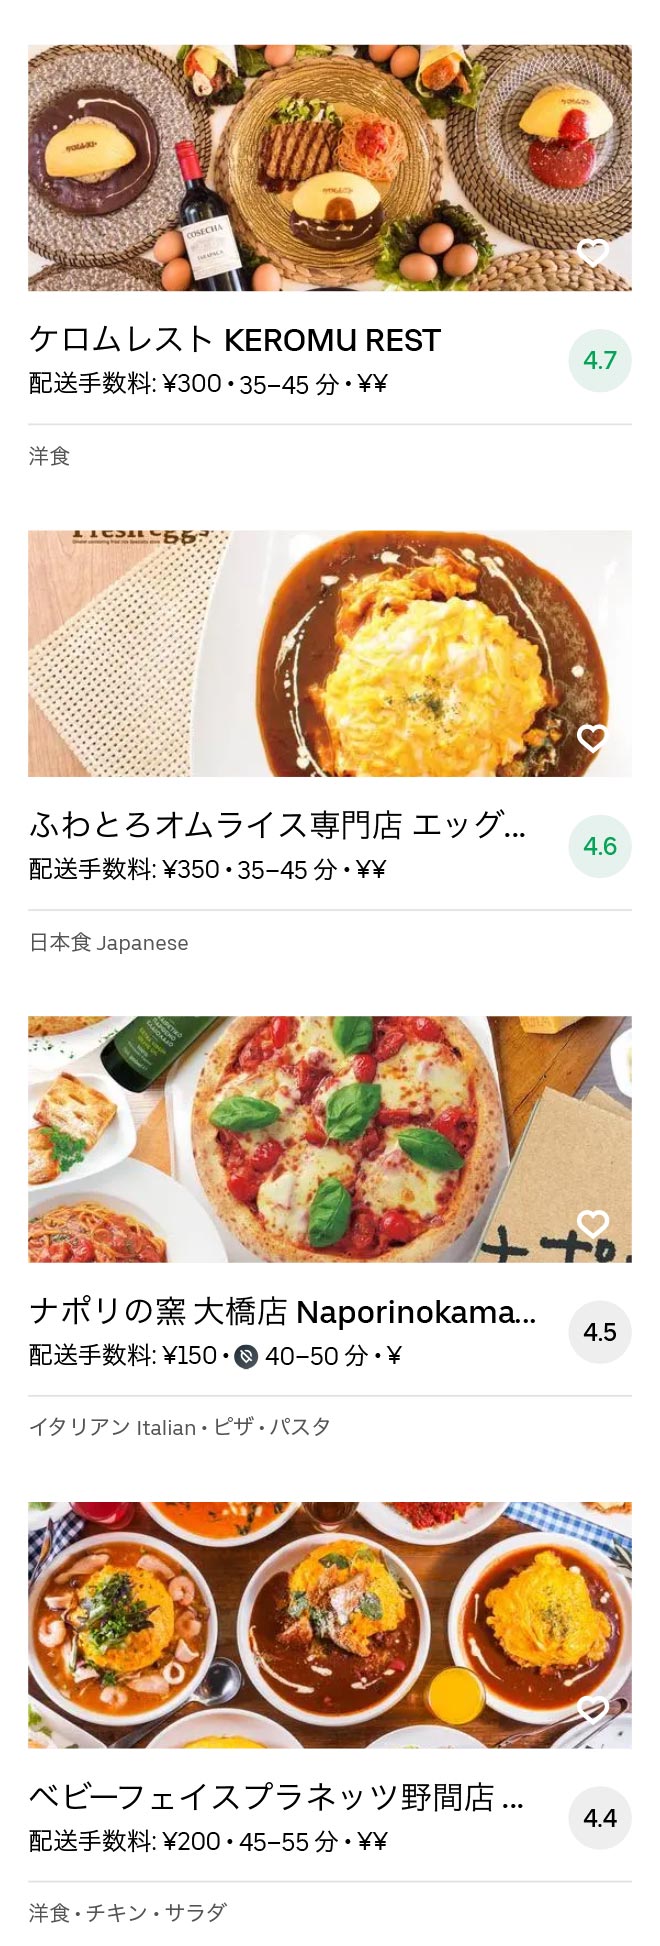 Hakata minami menu 2010 12